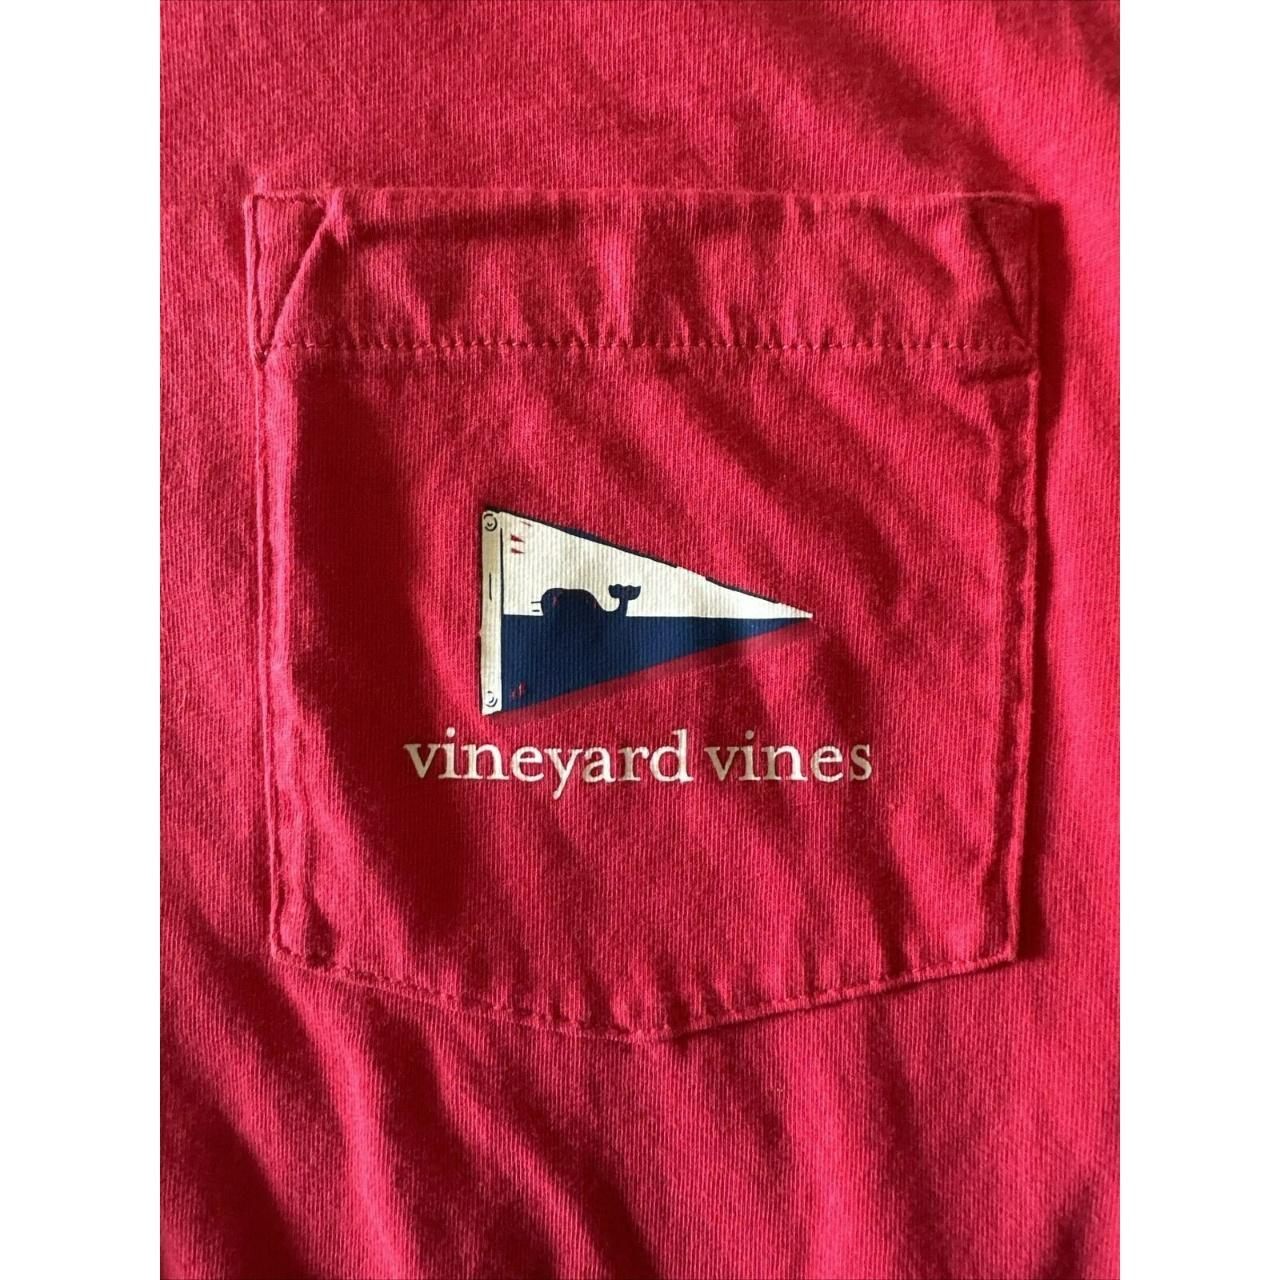 This Vineyard Vines T-shirt features a nautical... - Depop